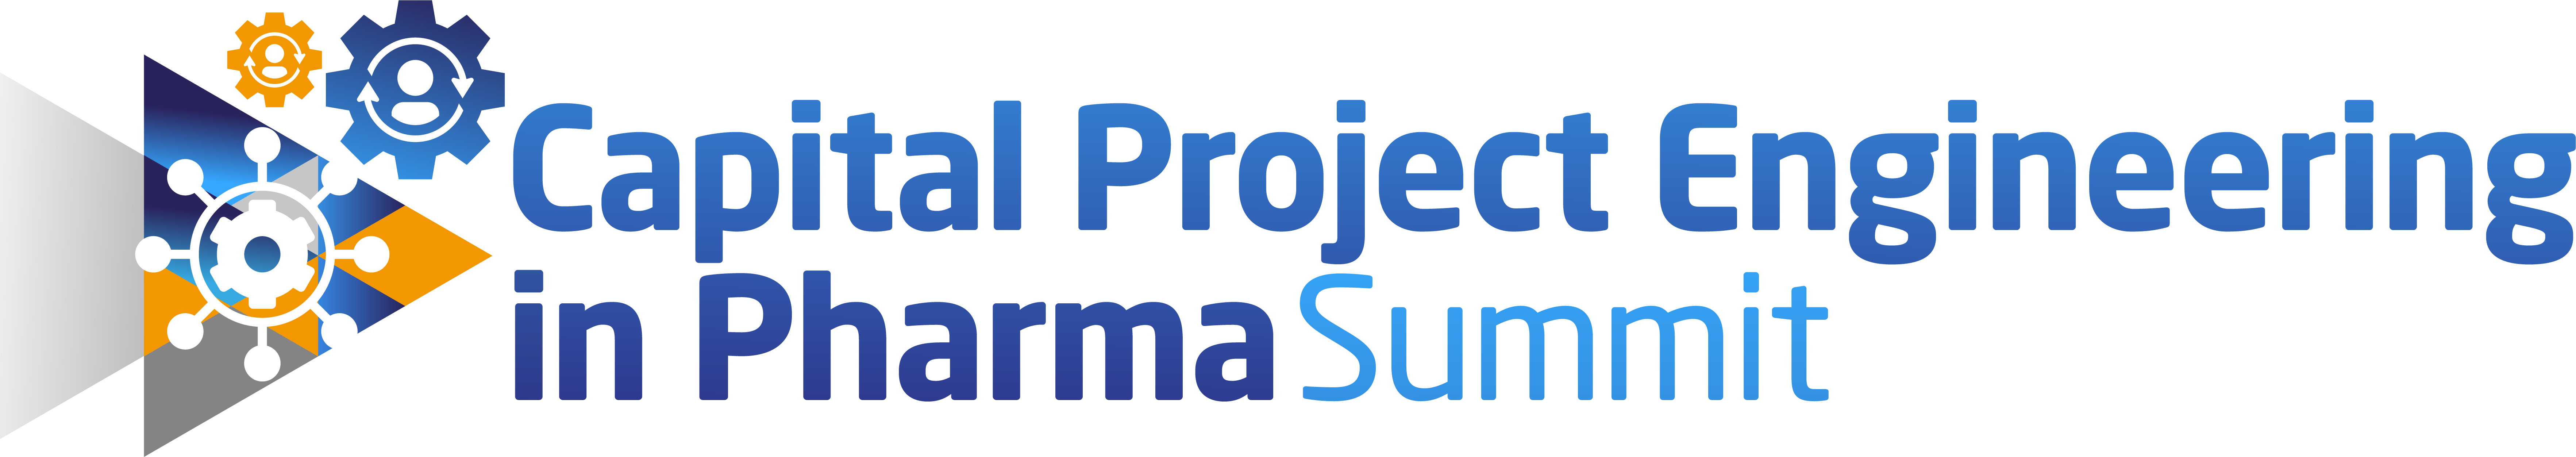 Capital Project Engineering in Pharma Summit logo